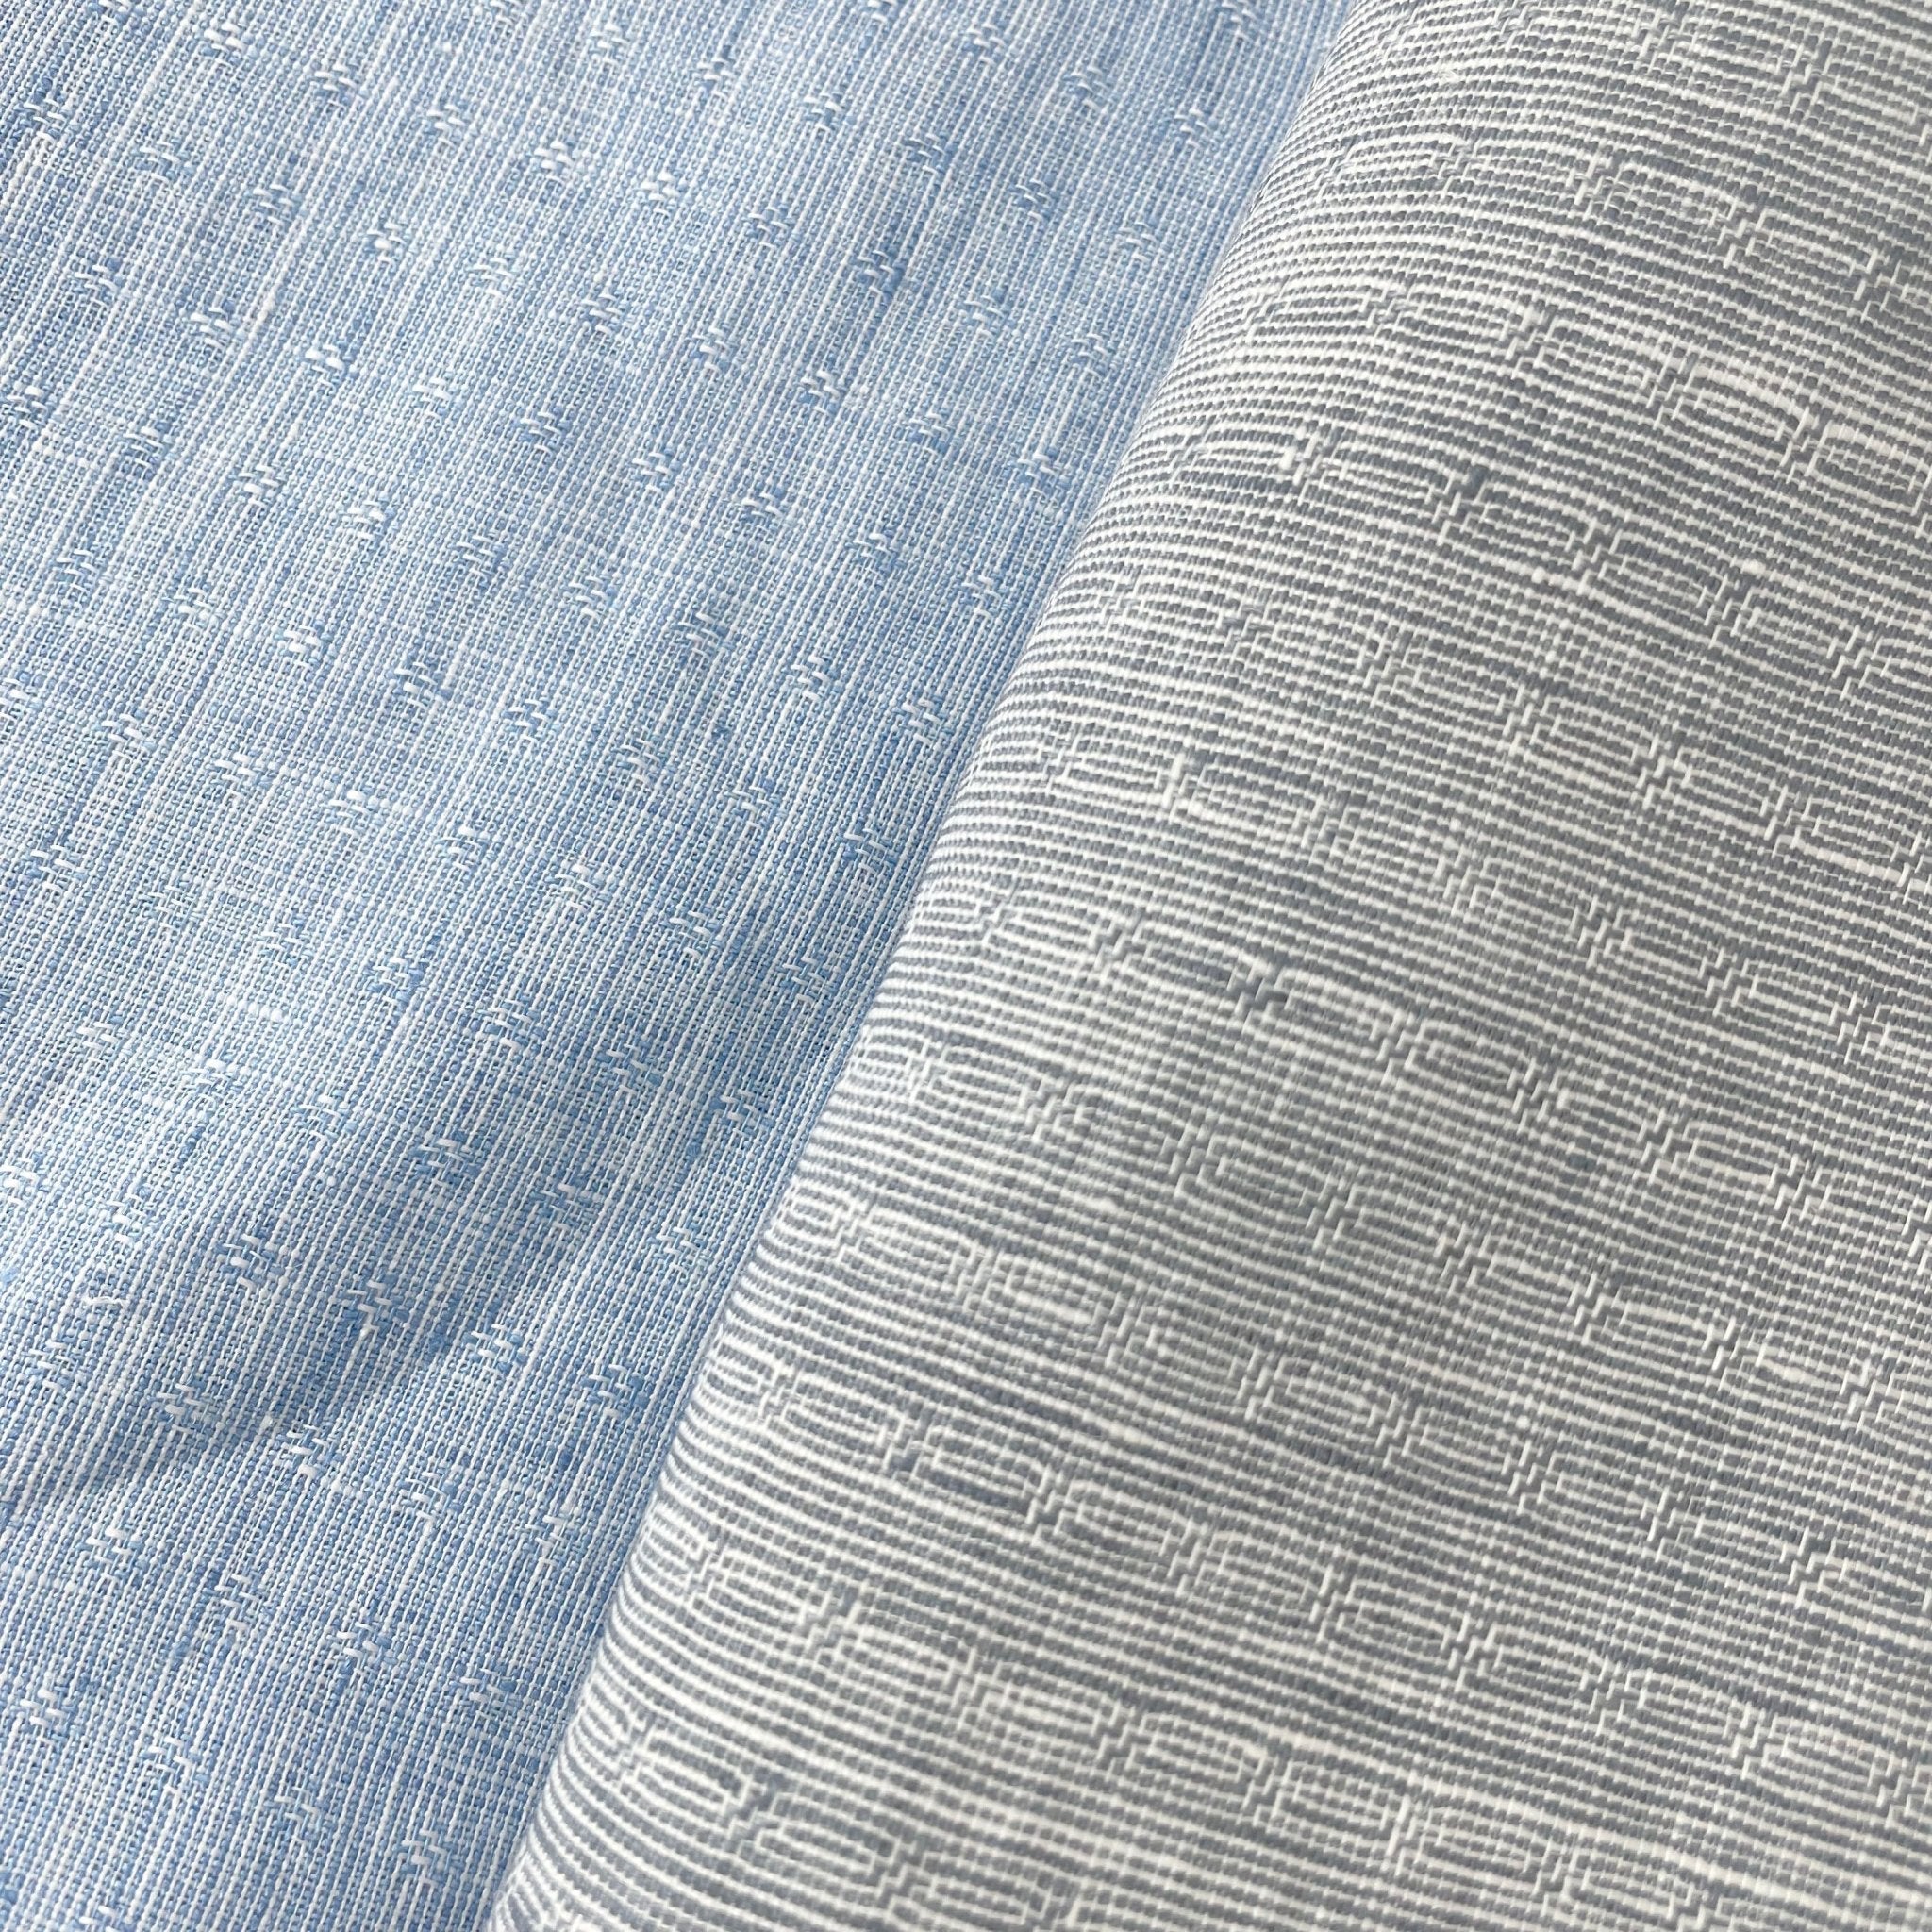 Linen Jacquard Small Pattern Fabric 4888 4887 - The Linen Lab - Blue